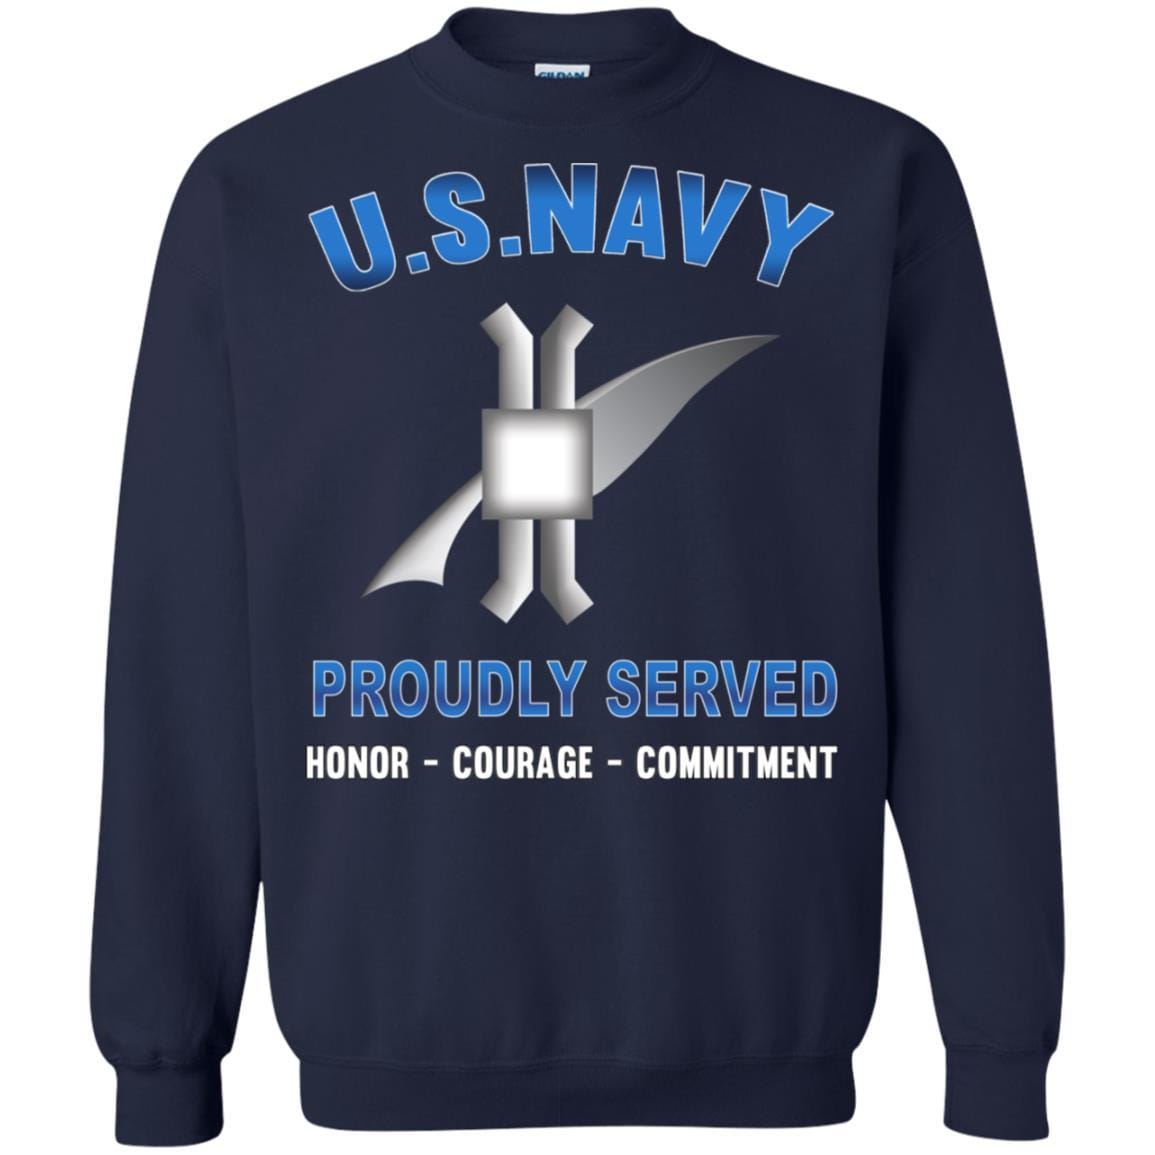 Navy Legalman Navy LN - Proudly Served T-Shirt For Men On Front-TShirt-Navy-Veterans Nation